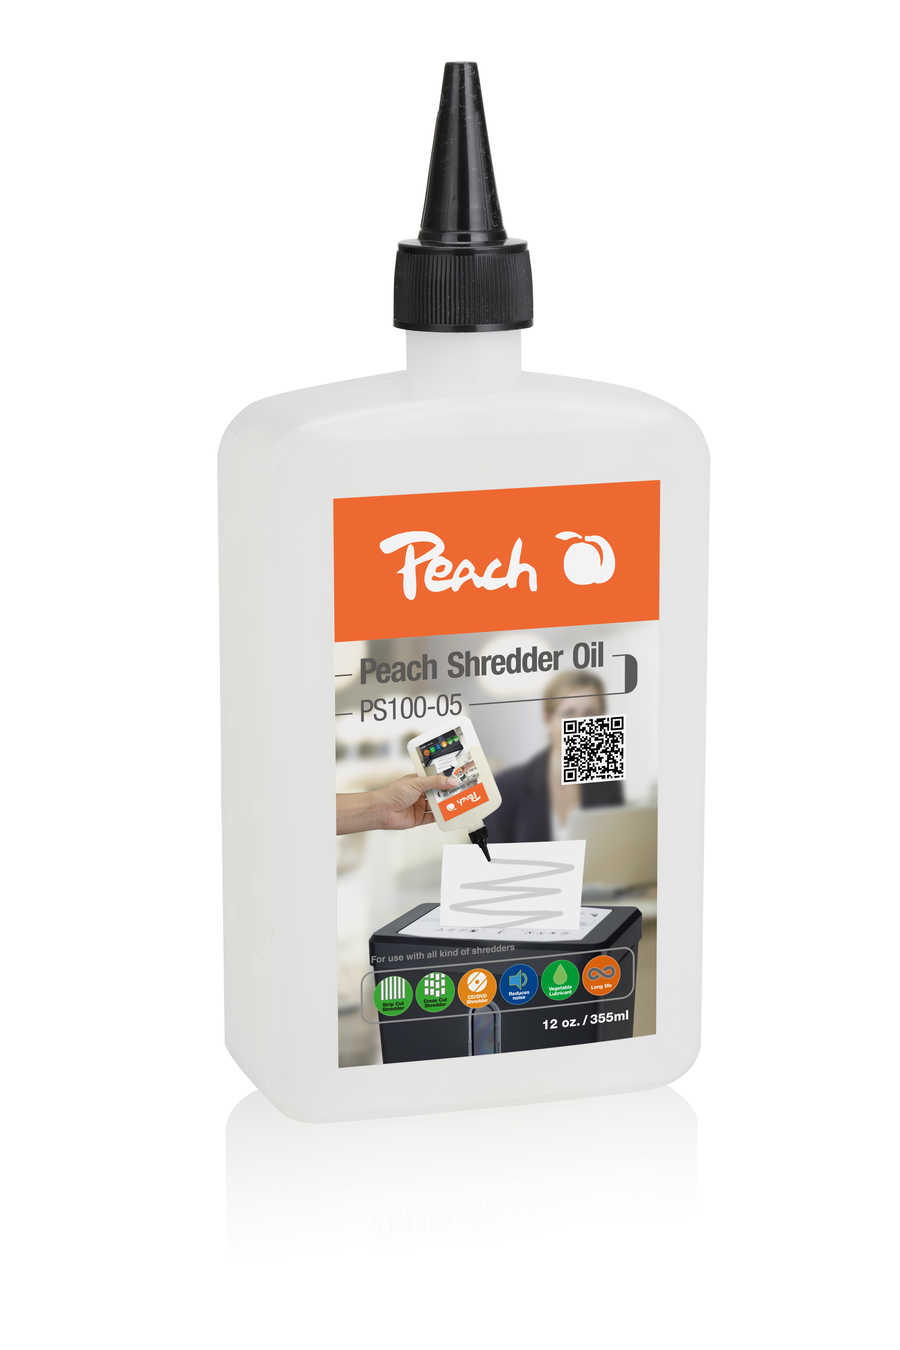 Image of Peach Spezial Öl Aktenvernichterbei 3ppp3 Peach online Shop